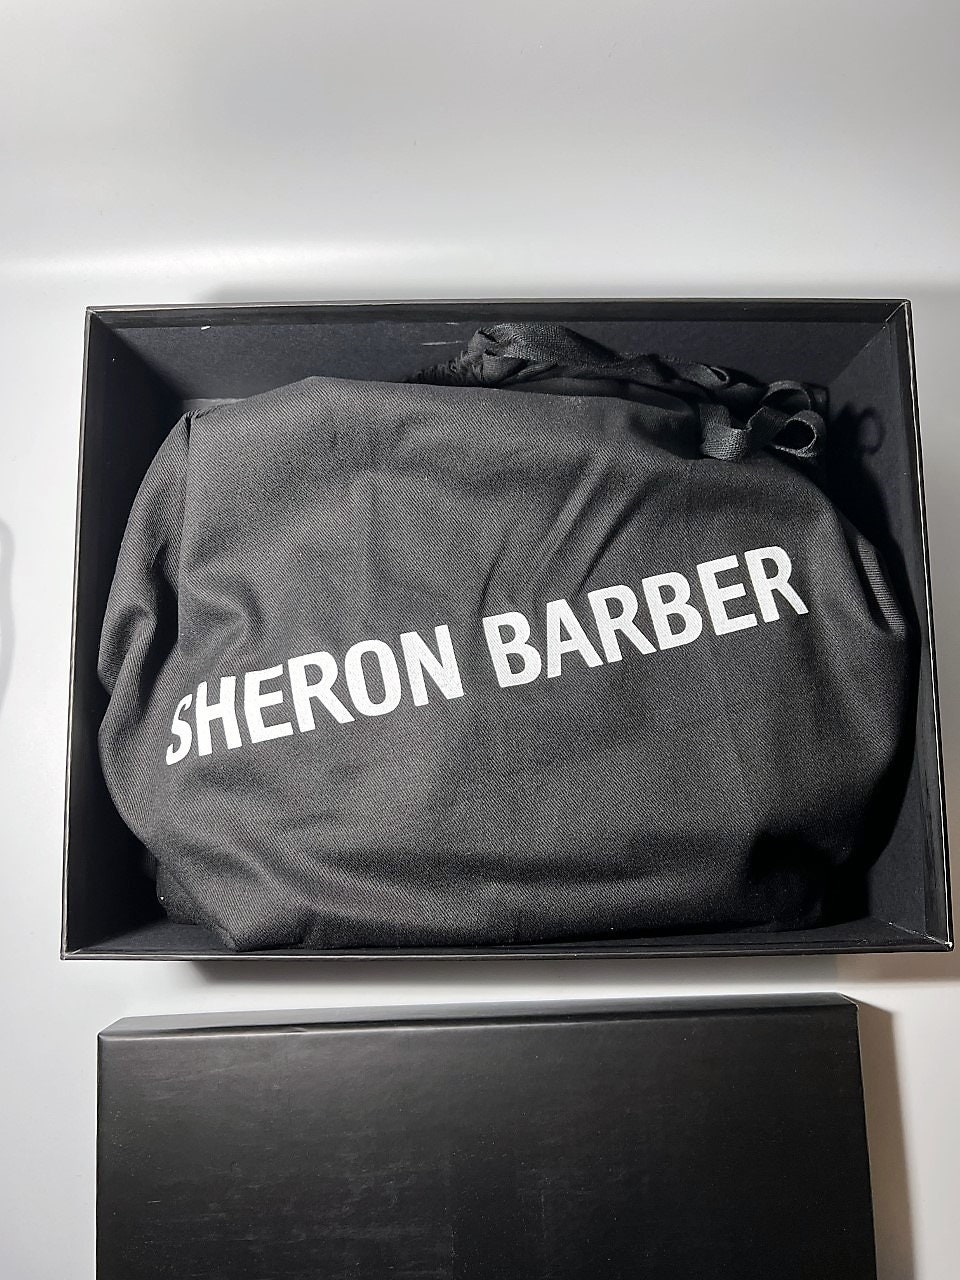 sheron barber mickey